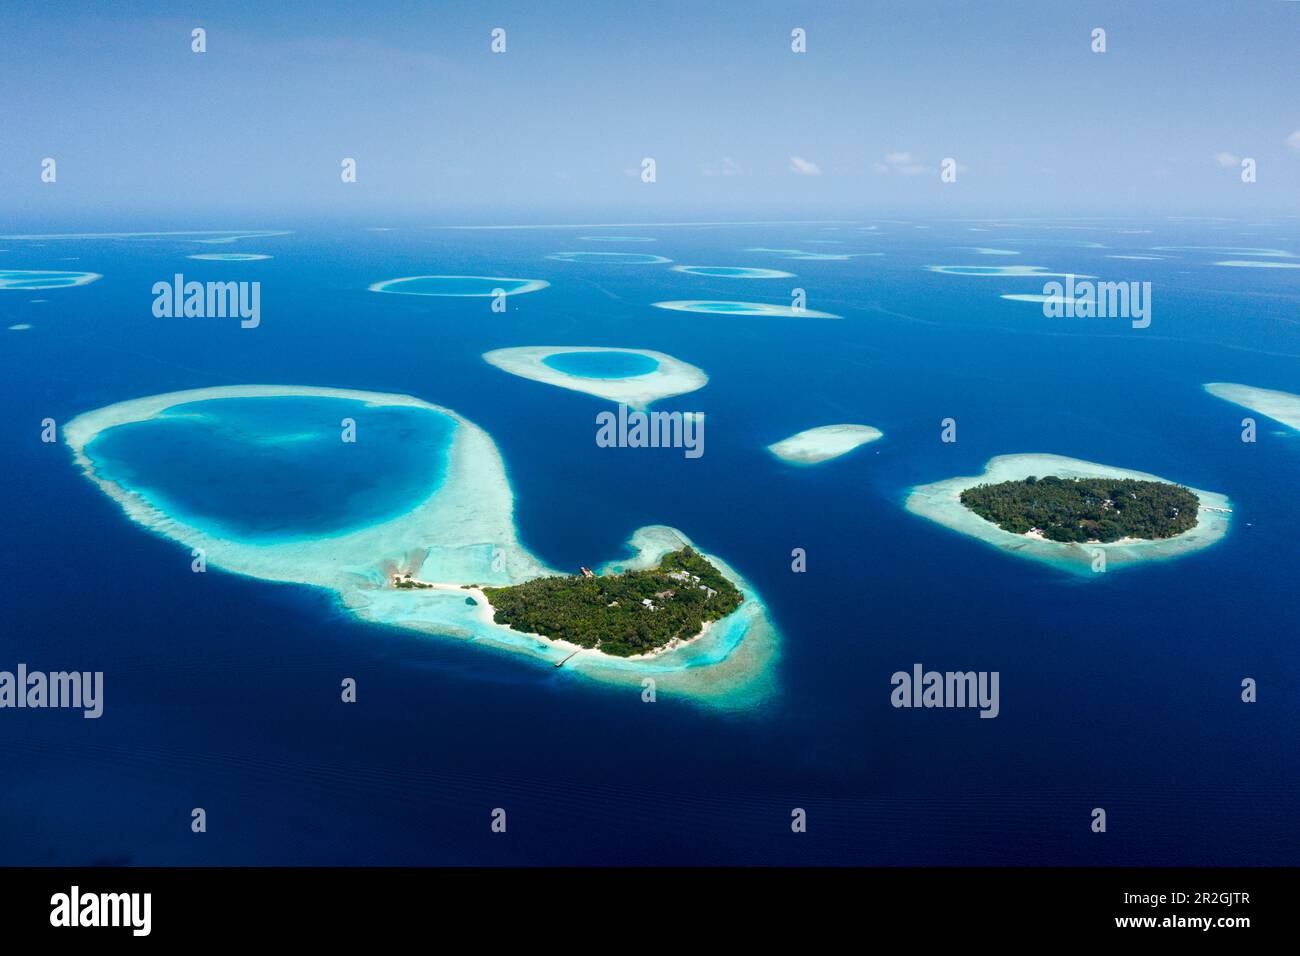 Resort Island of Villivaru and Biyaadhoo, South Male Atoll, Indian Ocean, Maldives Stock Photo